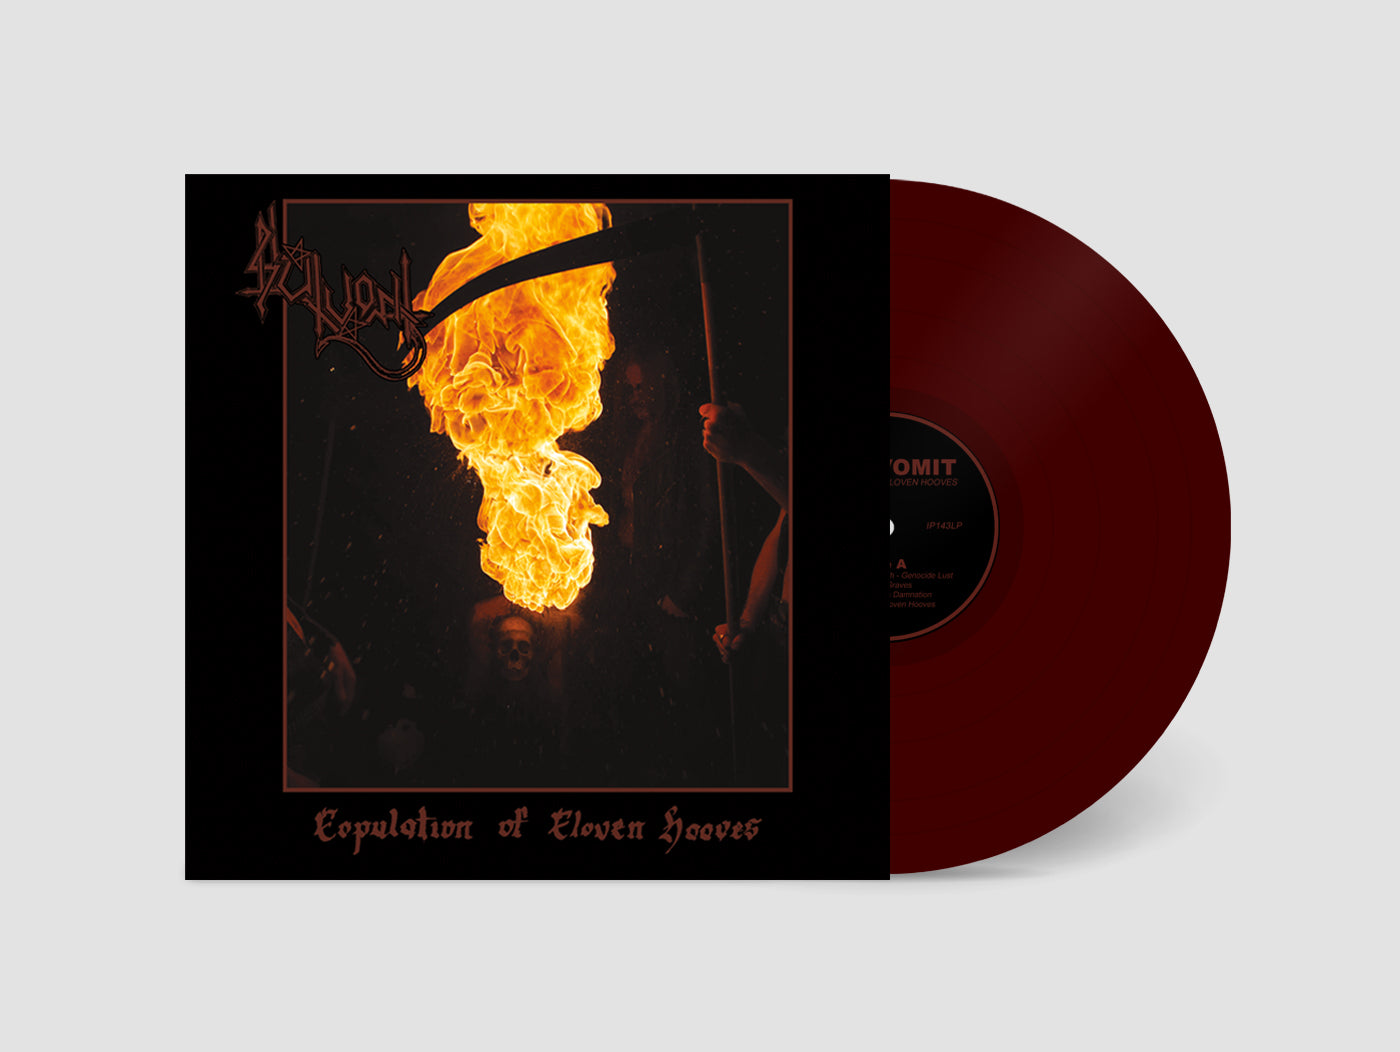 Slutvomit - Copulation of Cloven Hooves LP (ltd. red vinyl)